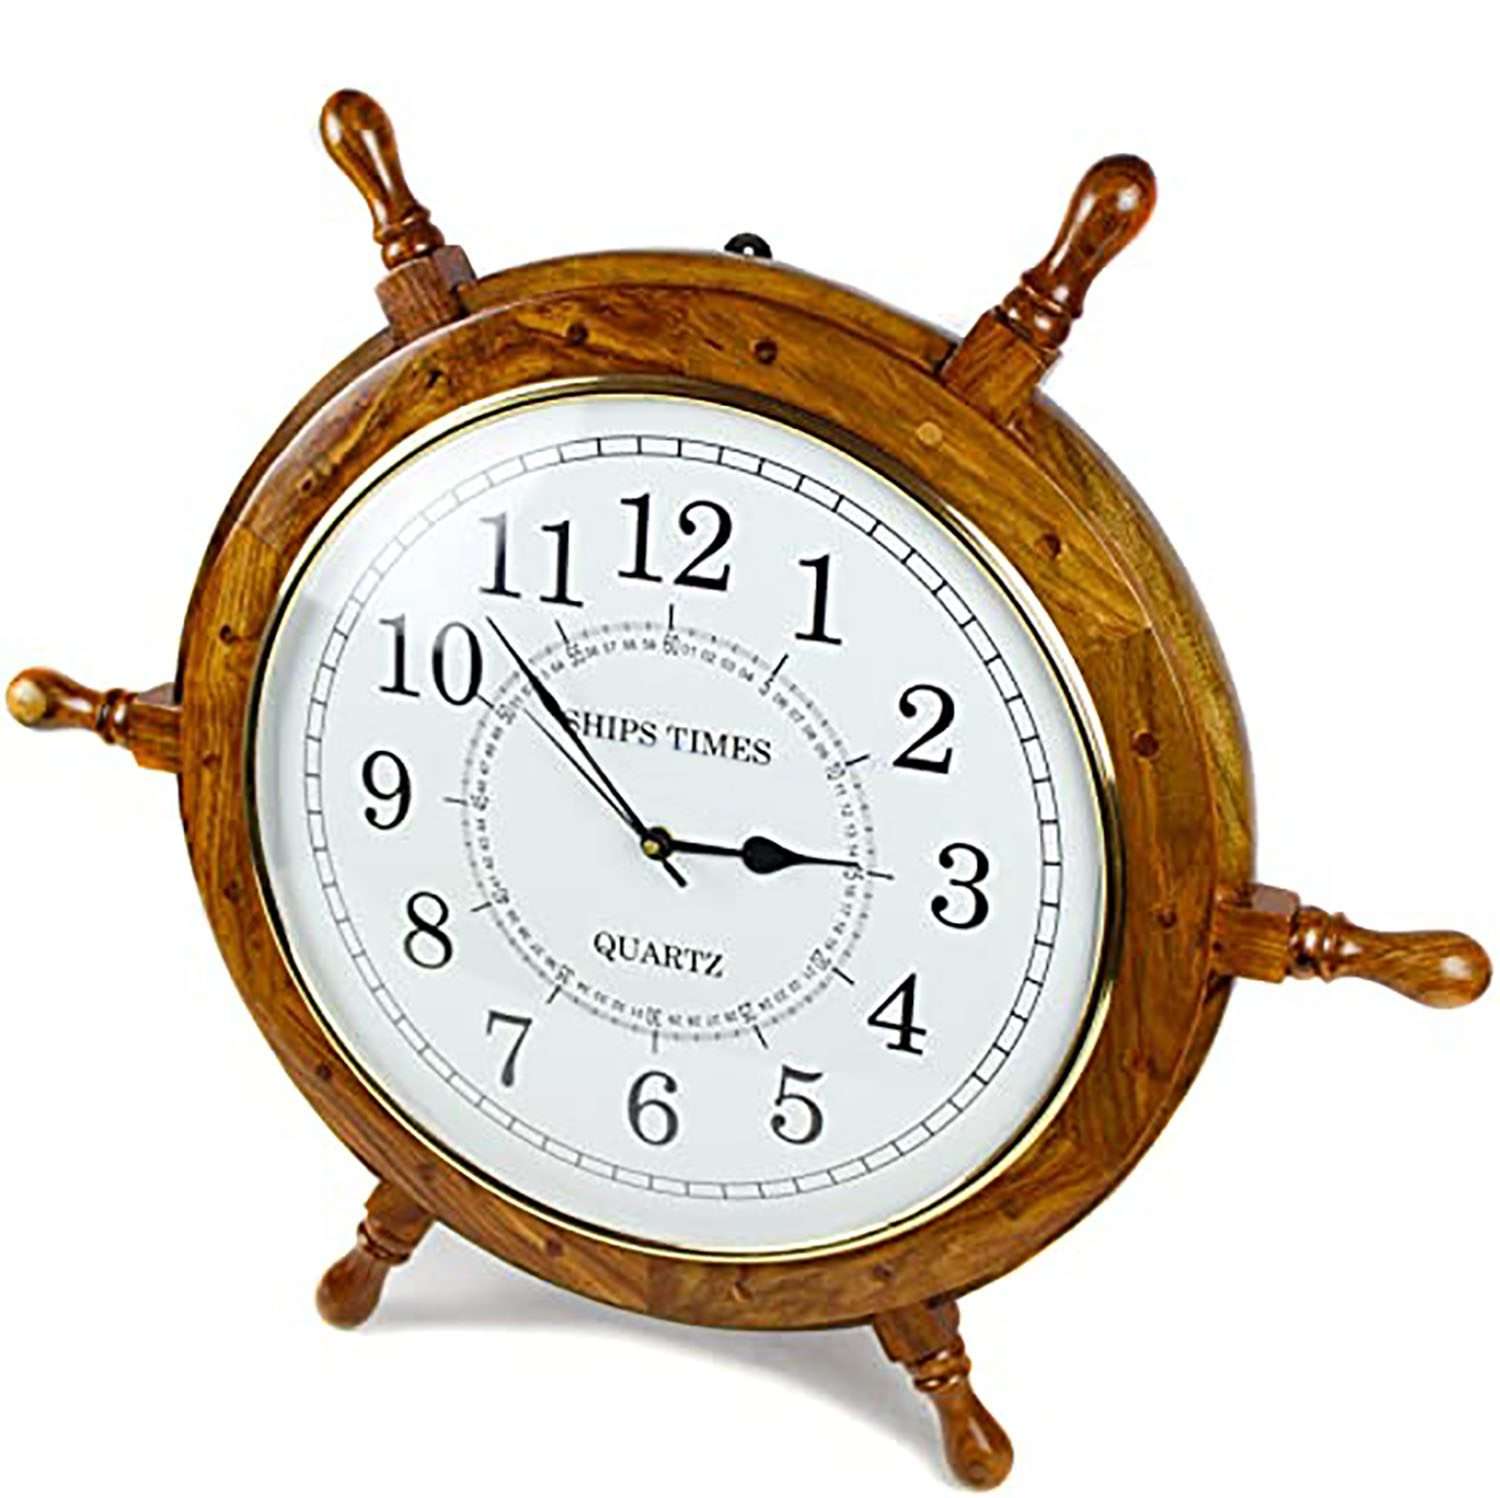 Wooden Handcrafted Nautical Ship Wheel Quartz Wall Clock -Rustic Home Décor